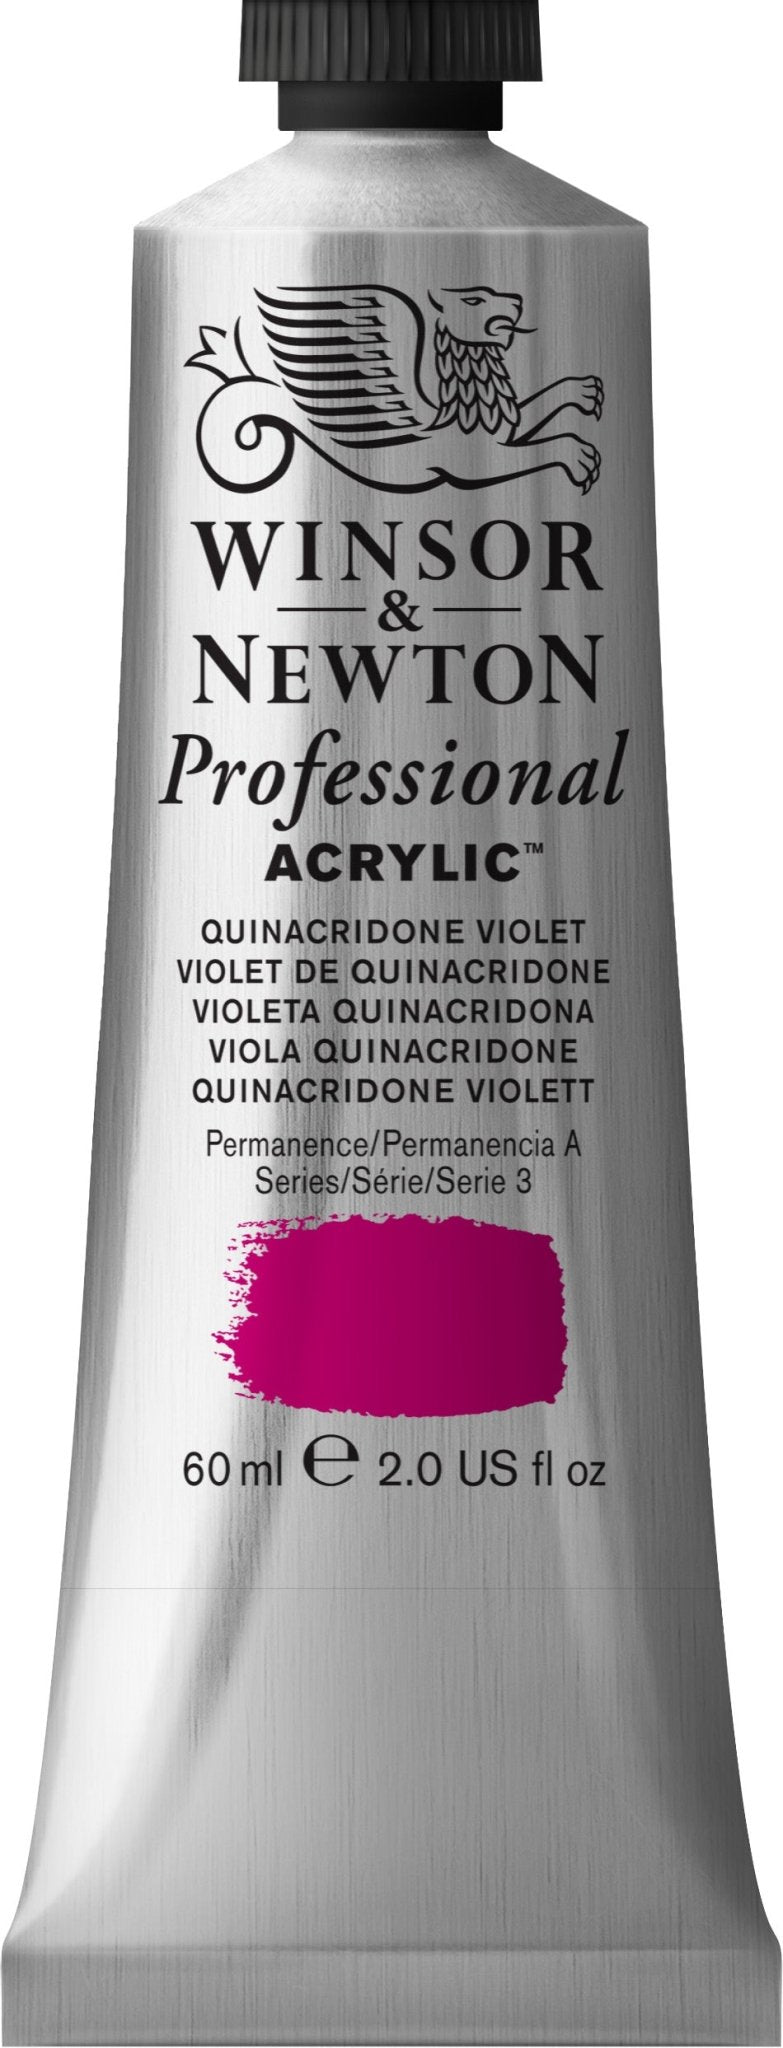 W & N Professional Acrylic 60ml Quinacridone Violet - theartshop.com.au